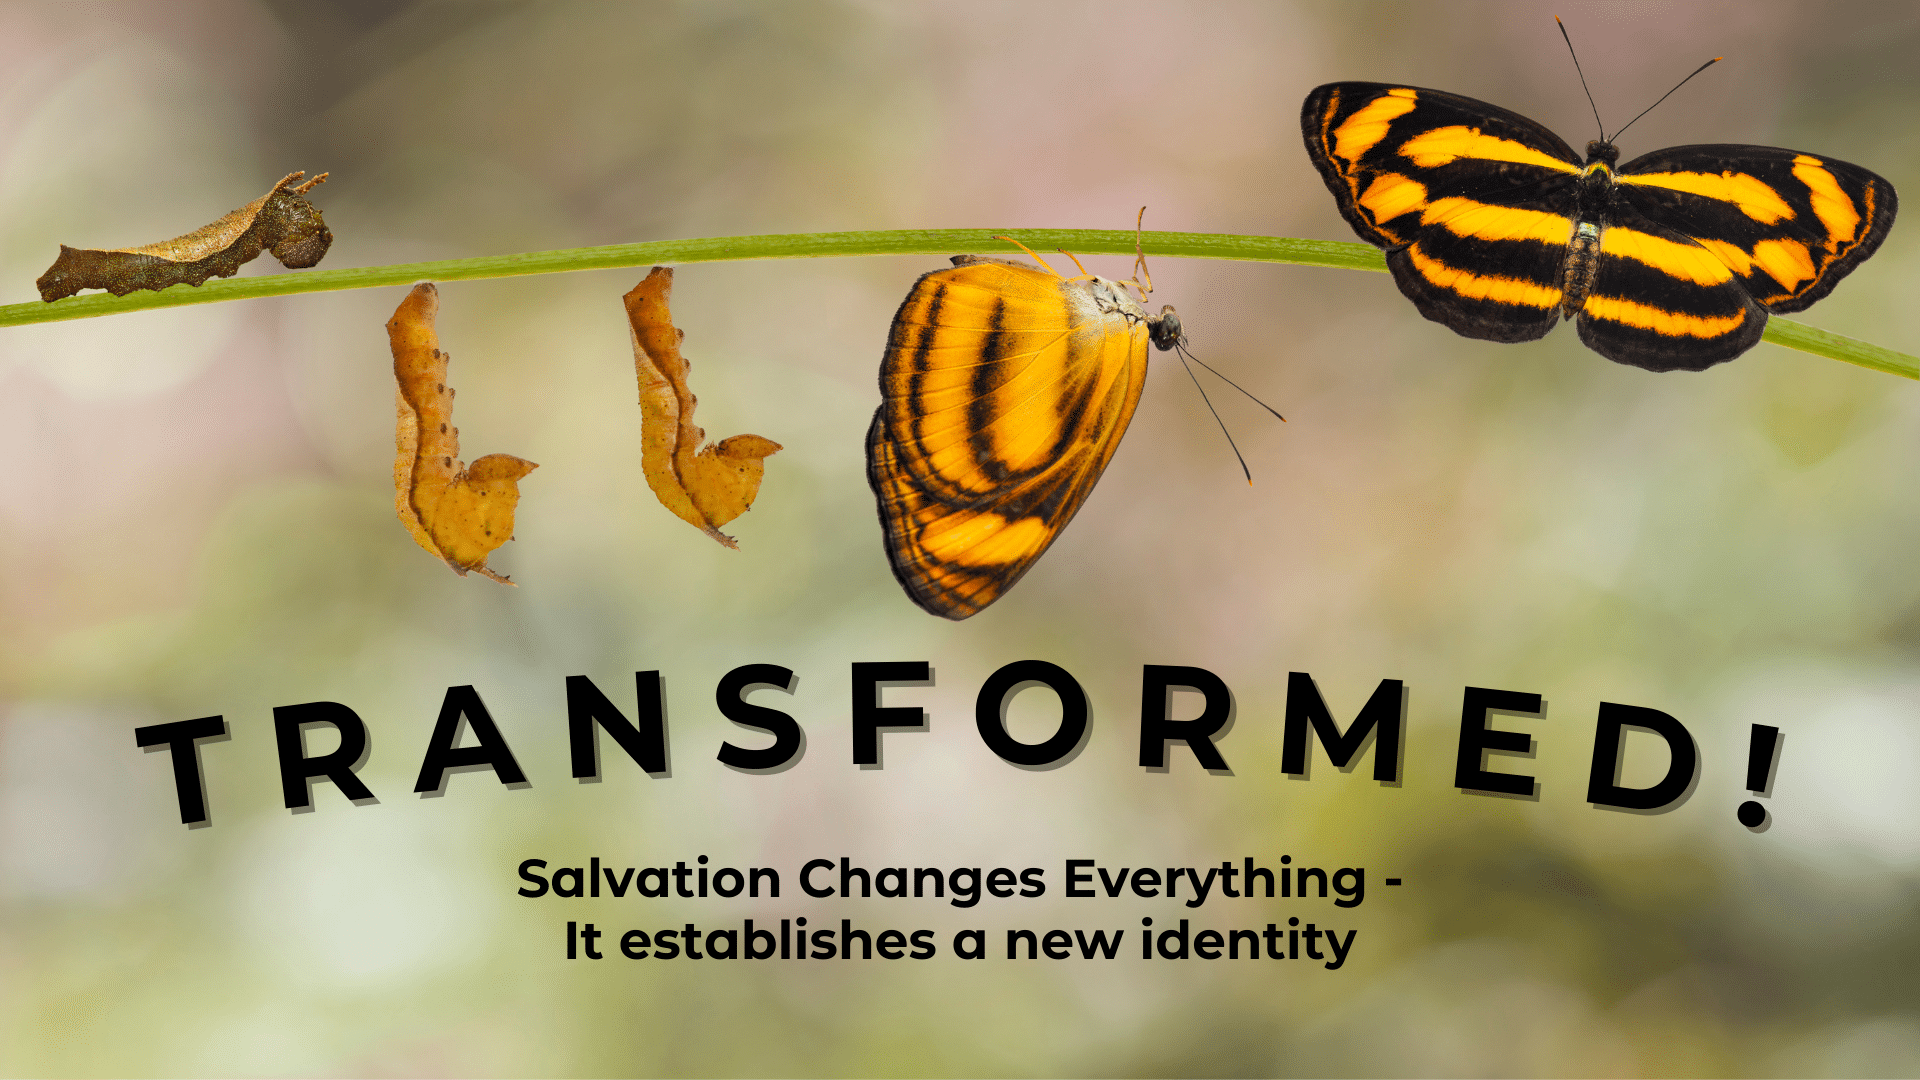 Transformation: Salvation establishes a new identity